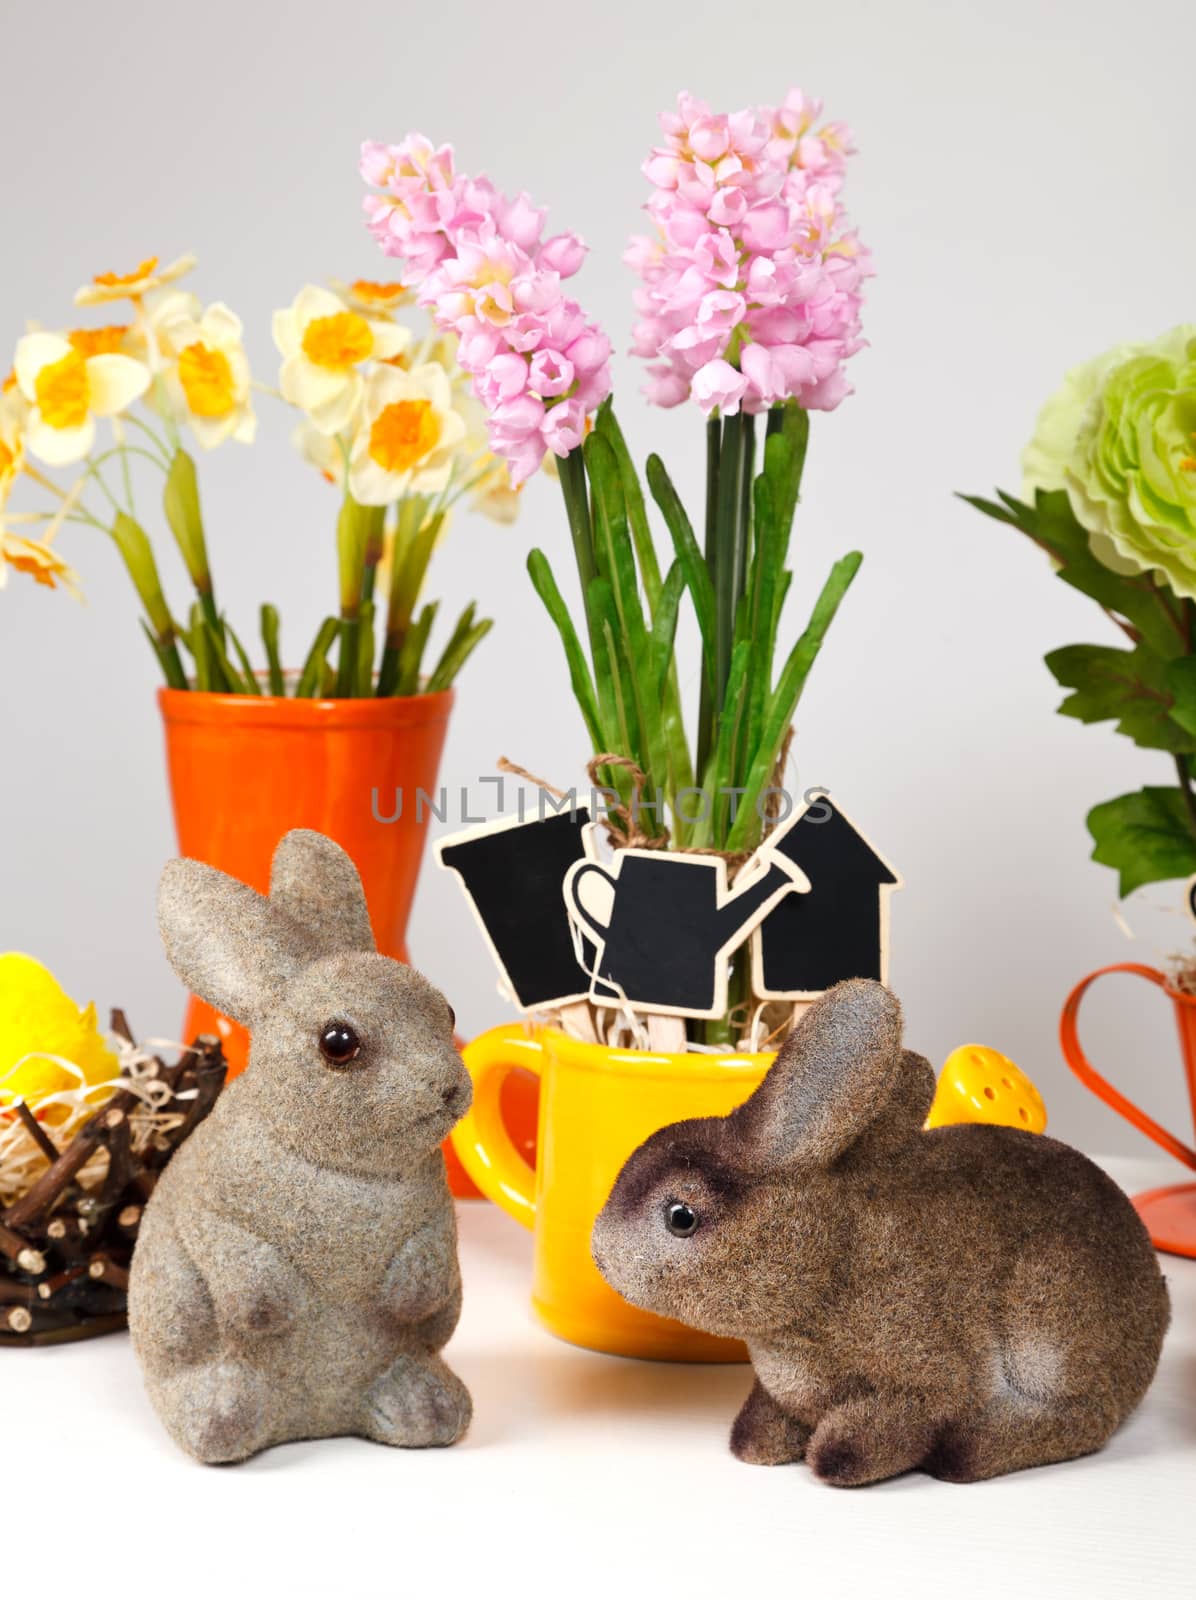 Easter bunny by serkucher